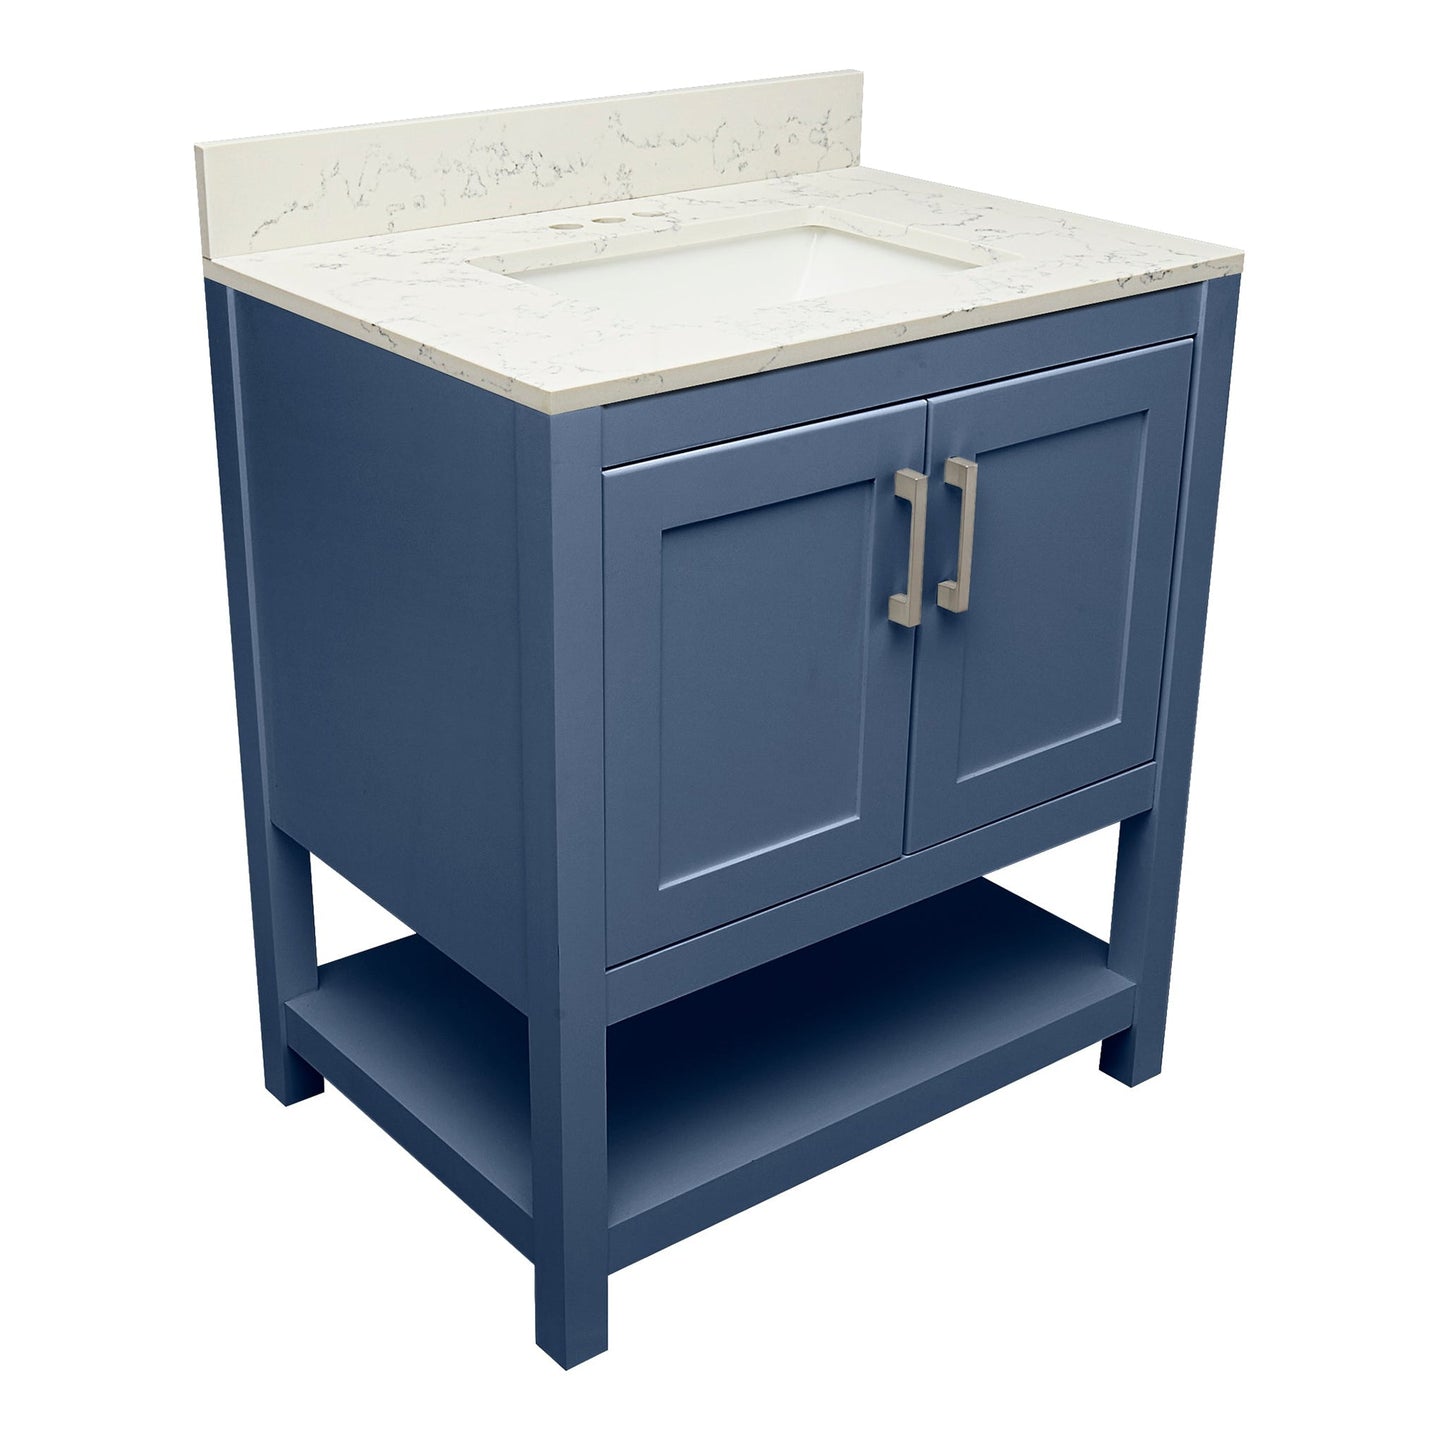 Ella's Bubbles Taos 31" Navy Blue Bathroom Vanity With Lyra White Quartz Stone Top With Backsplash and Sink